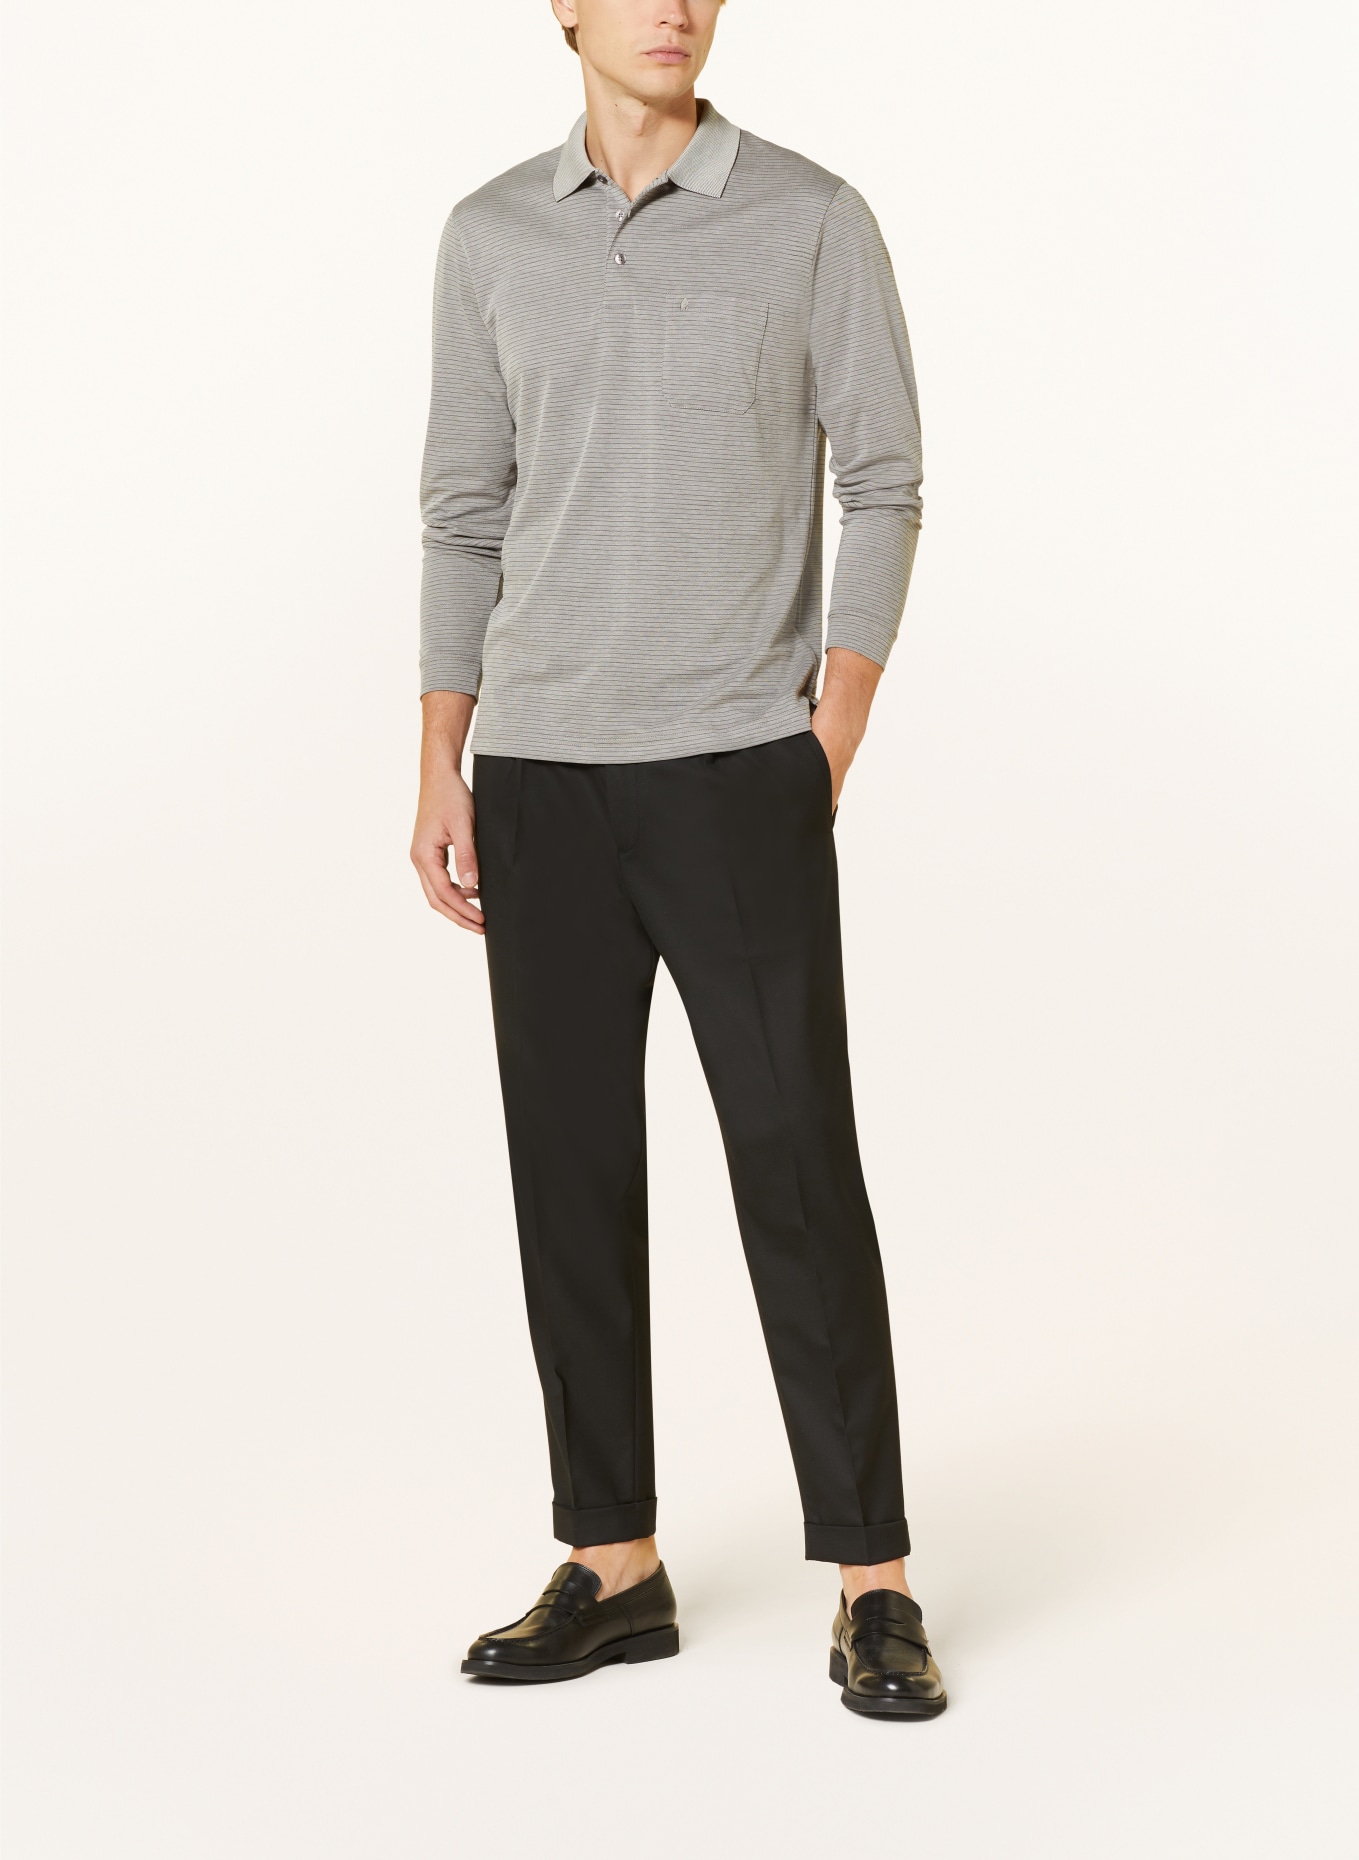 RAGMAN Jersey polo shirt regular fit, Color: GRAY (Image 2)